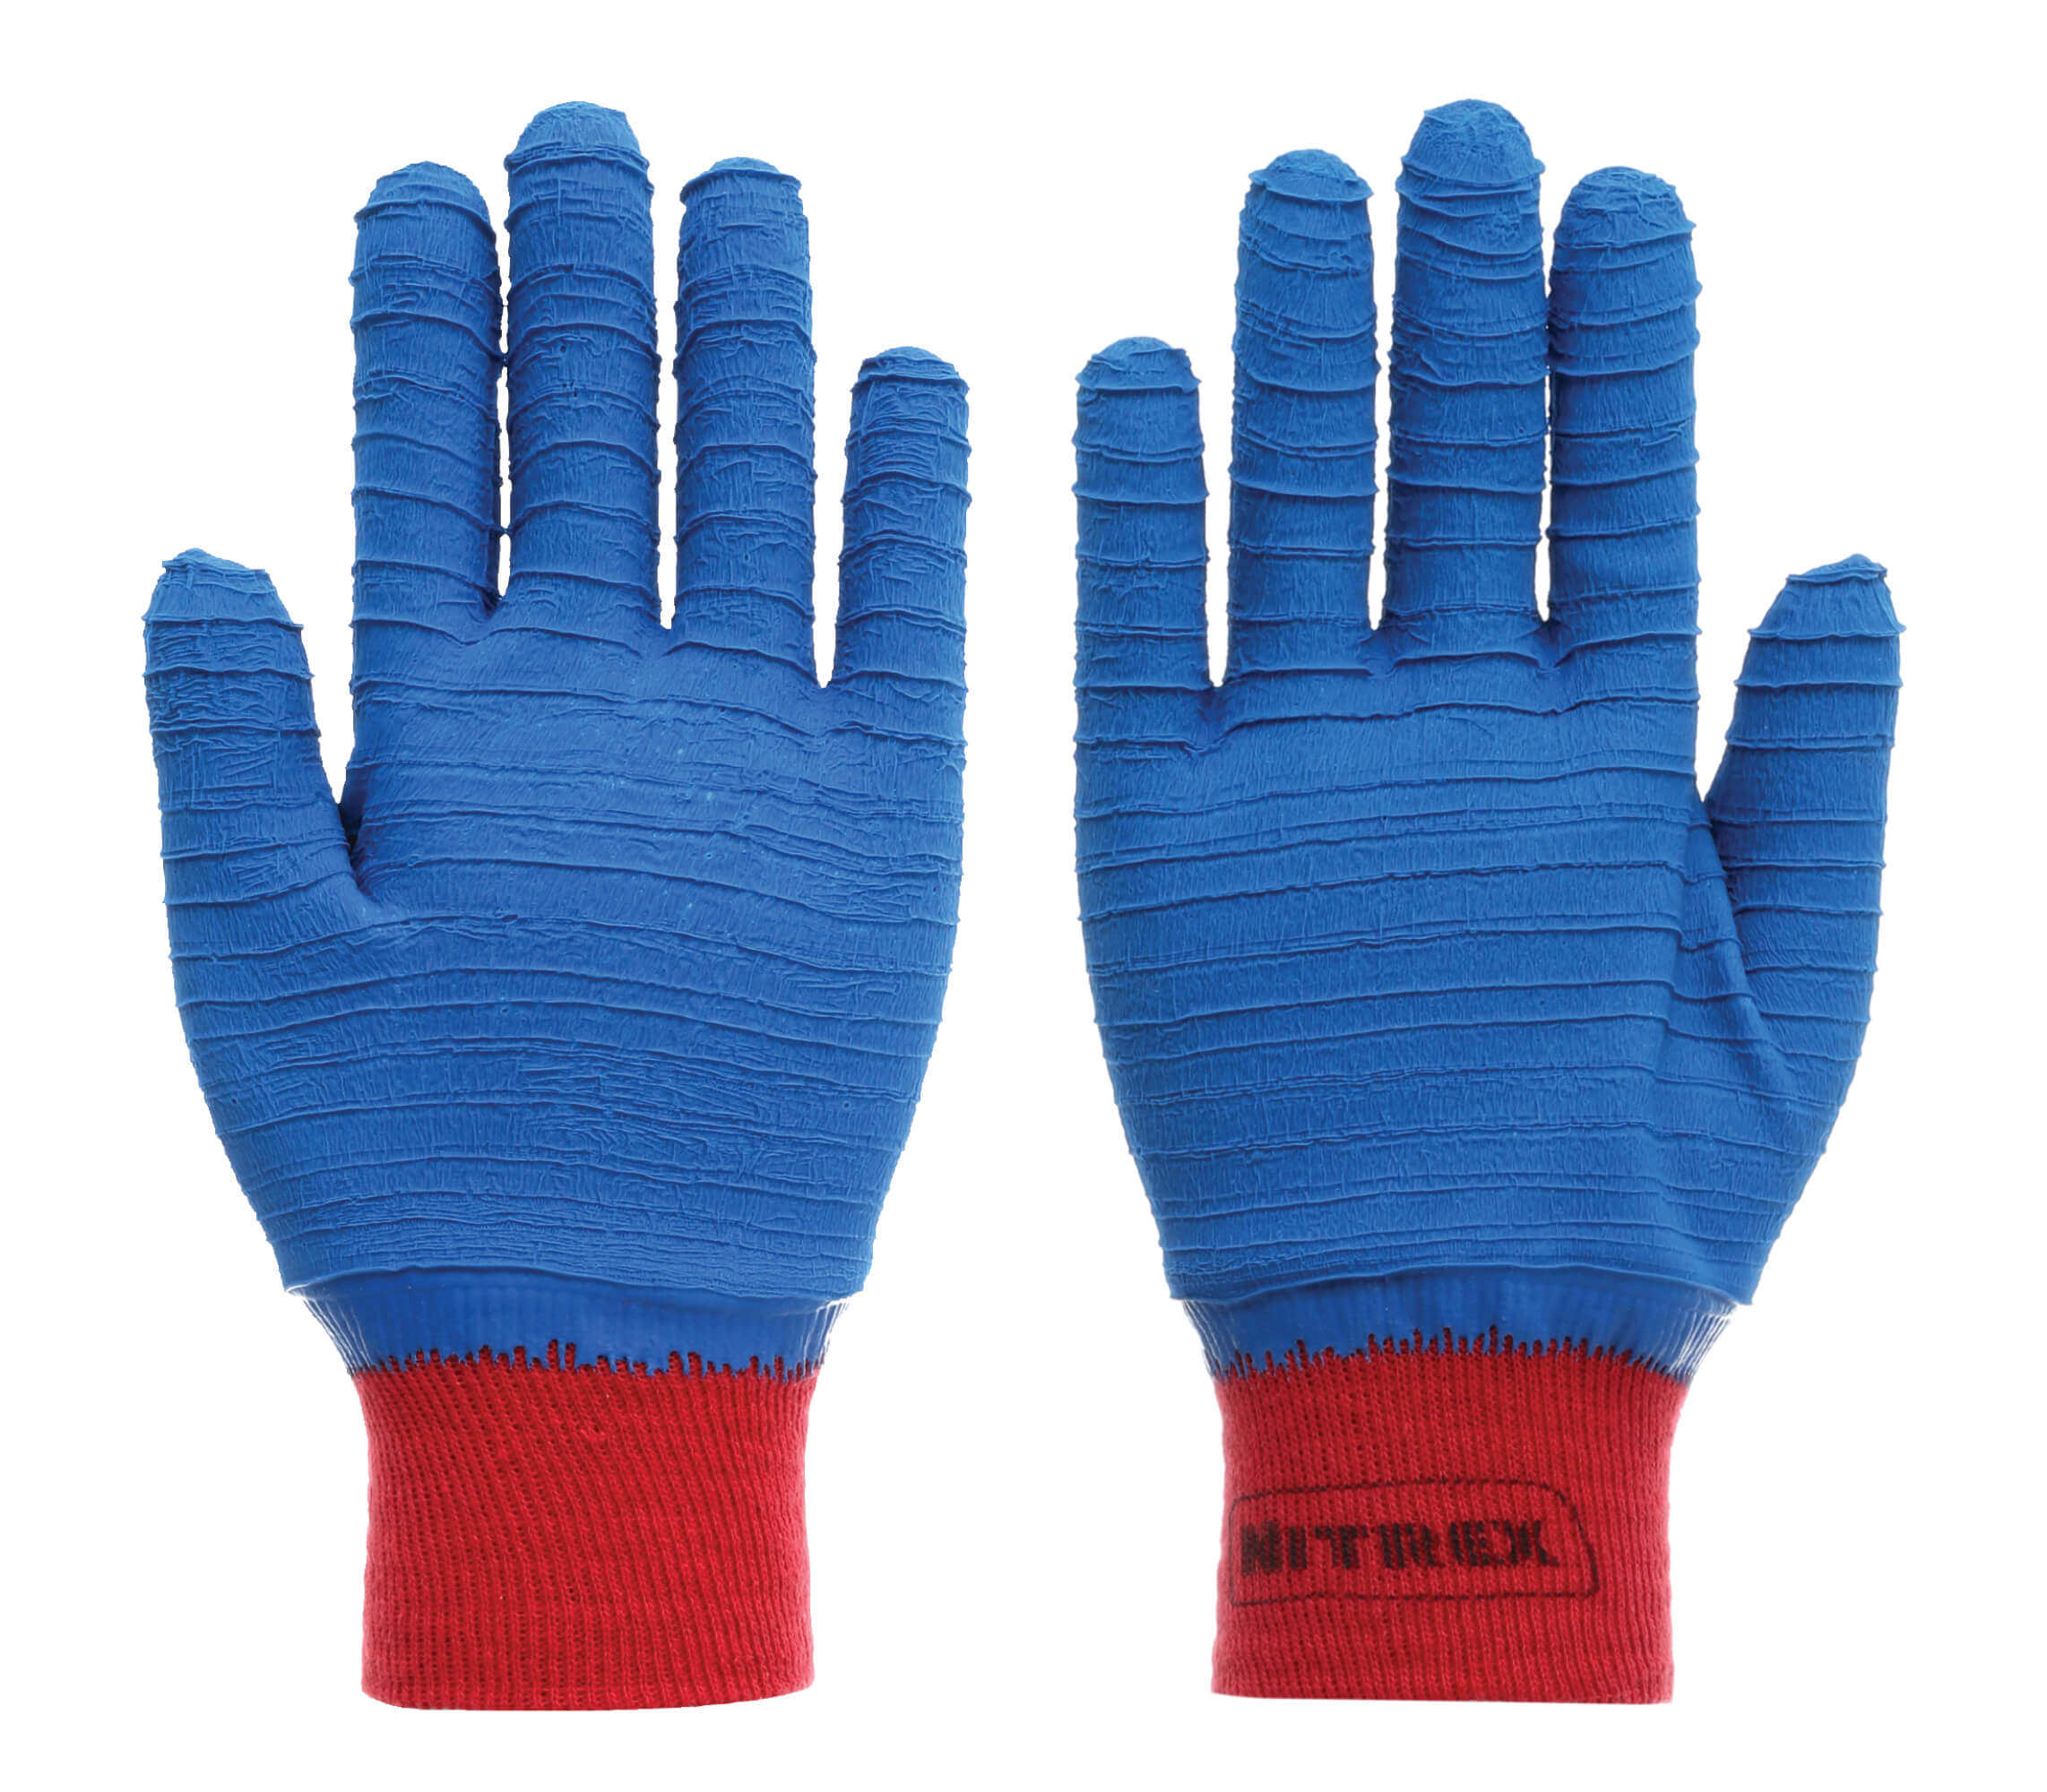 Nitrex 275BG - Latex Coated Gloves - Moisture Wicking - Level B Cut Protection - Size 8/Medium